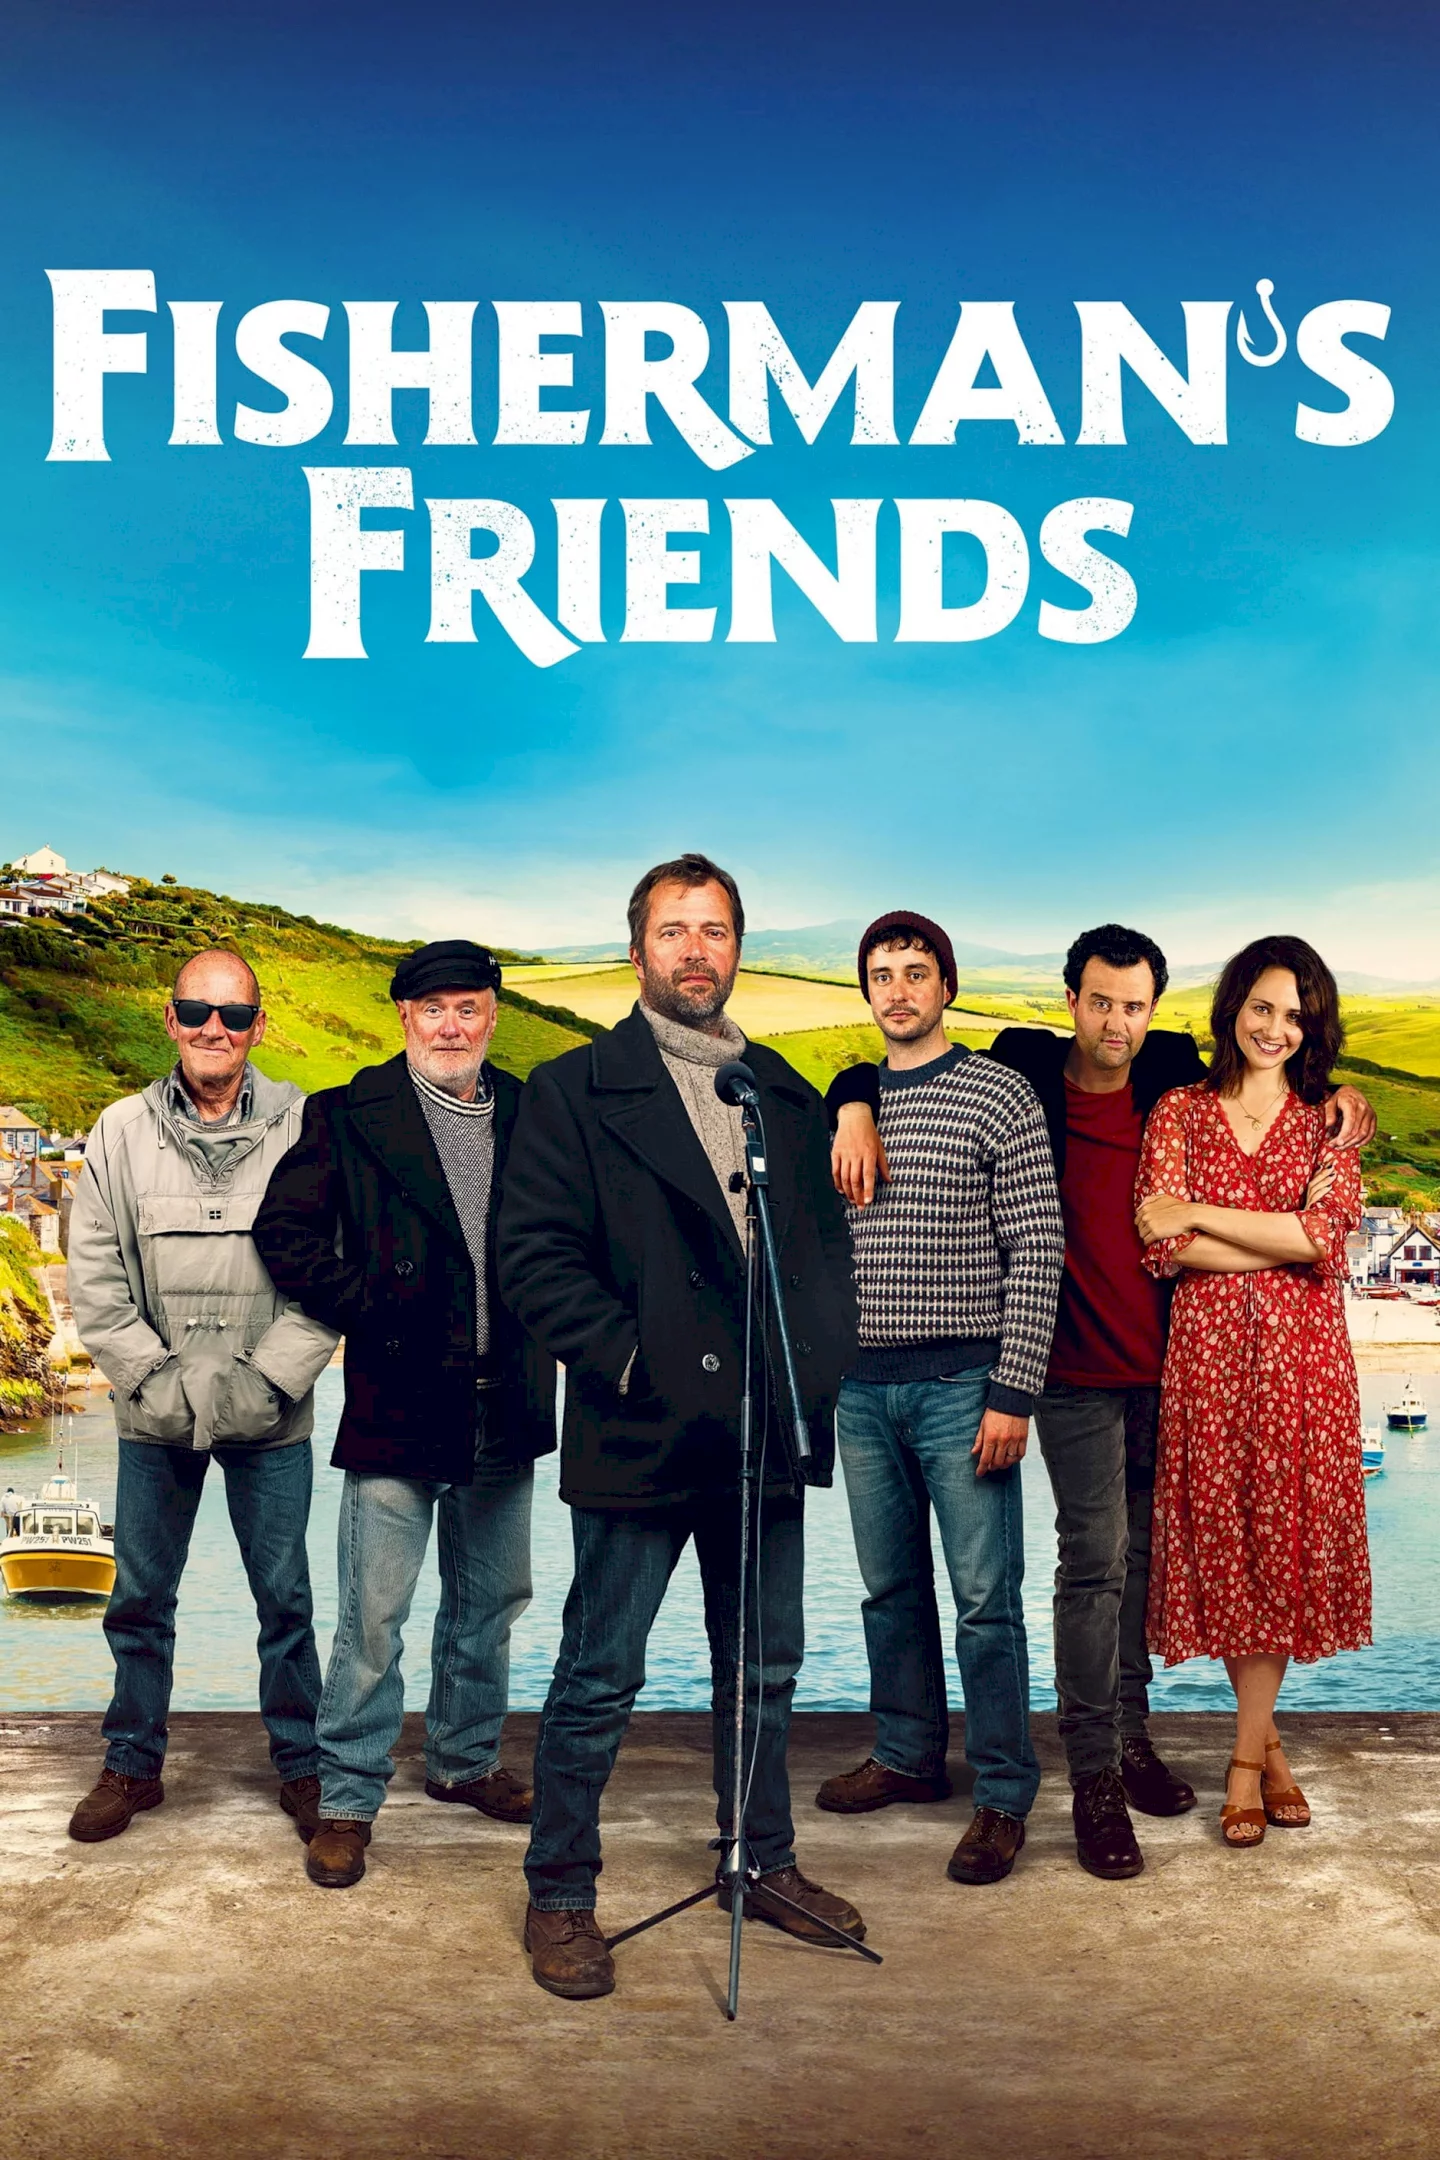 Photo du film : Fisherman's friends